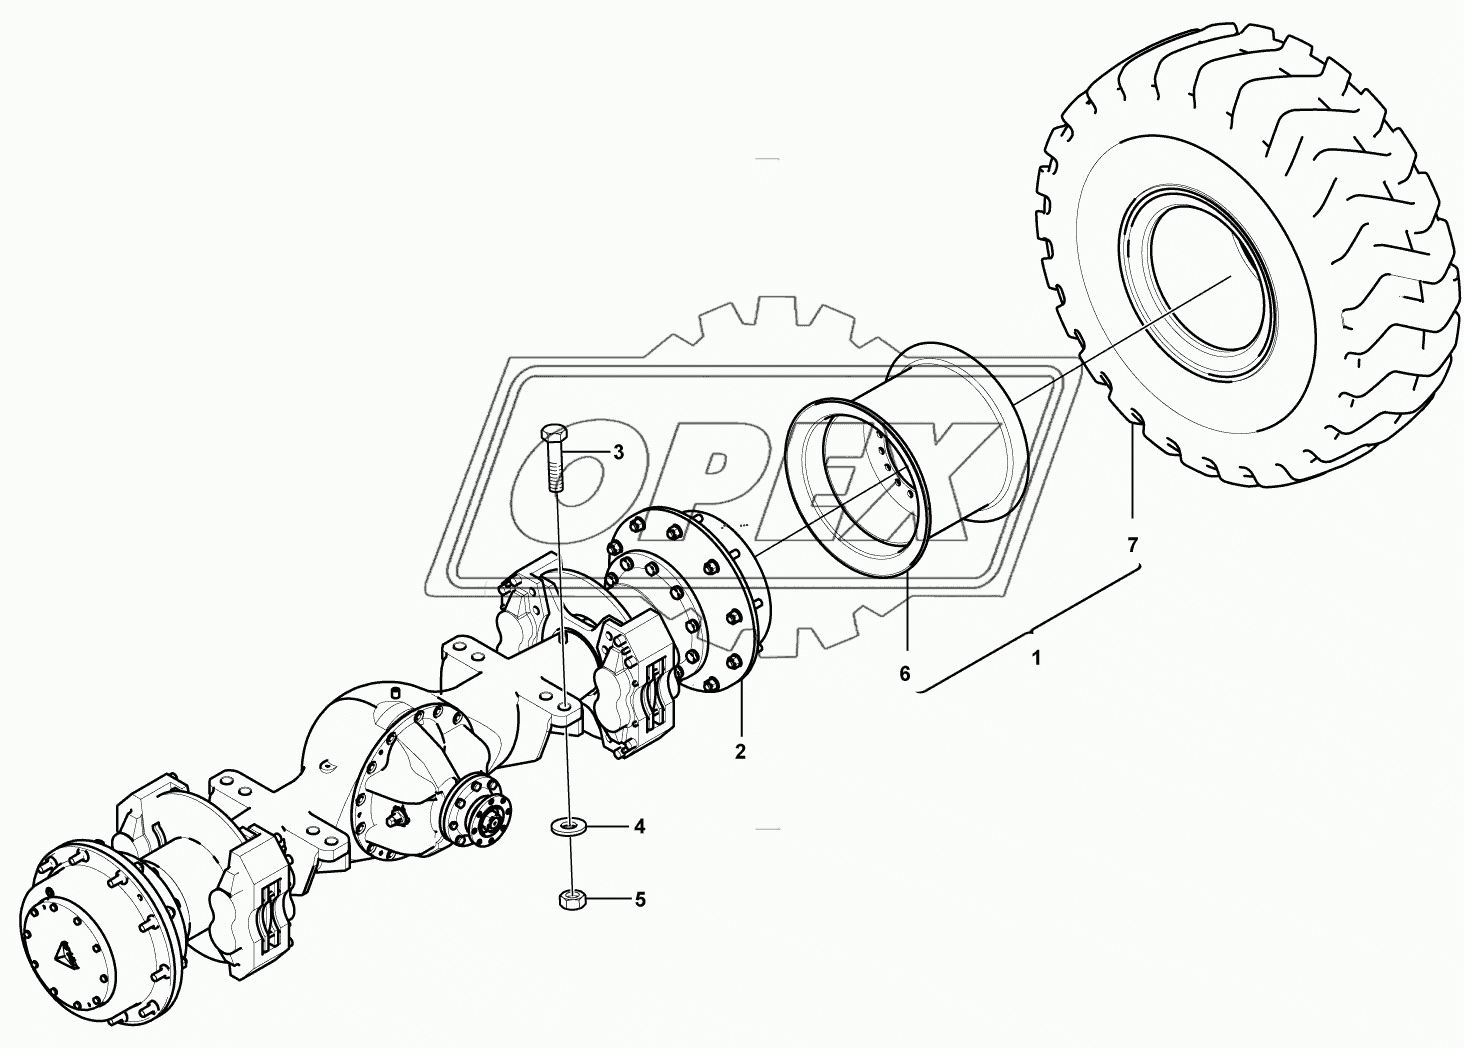 Rear axle system 1